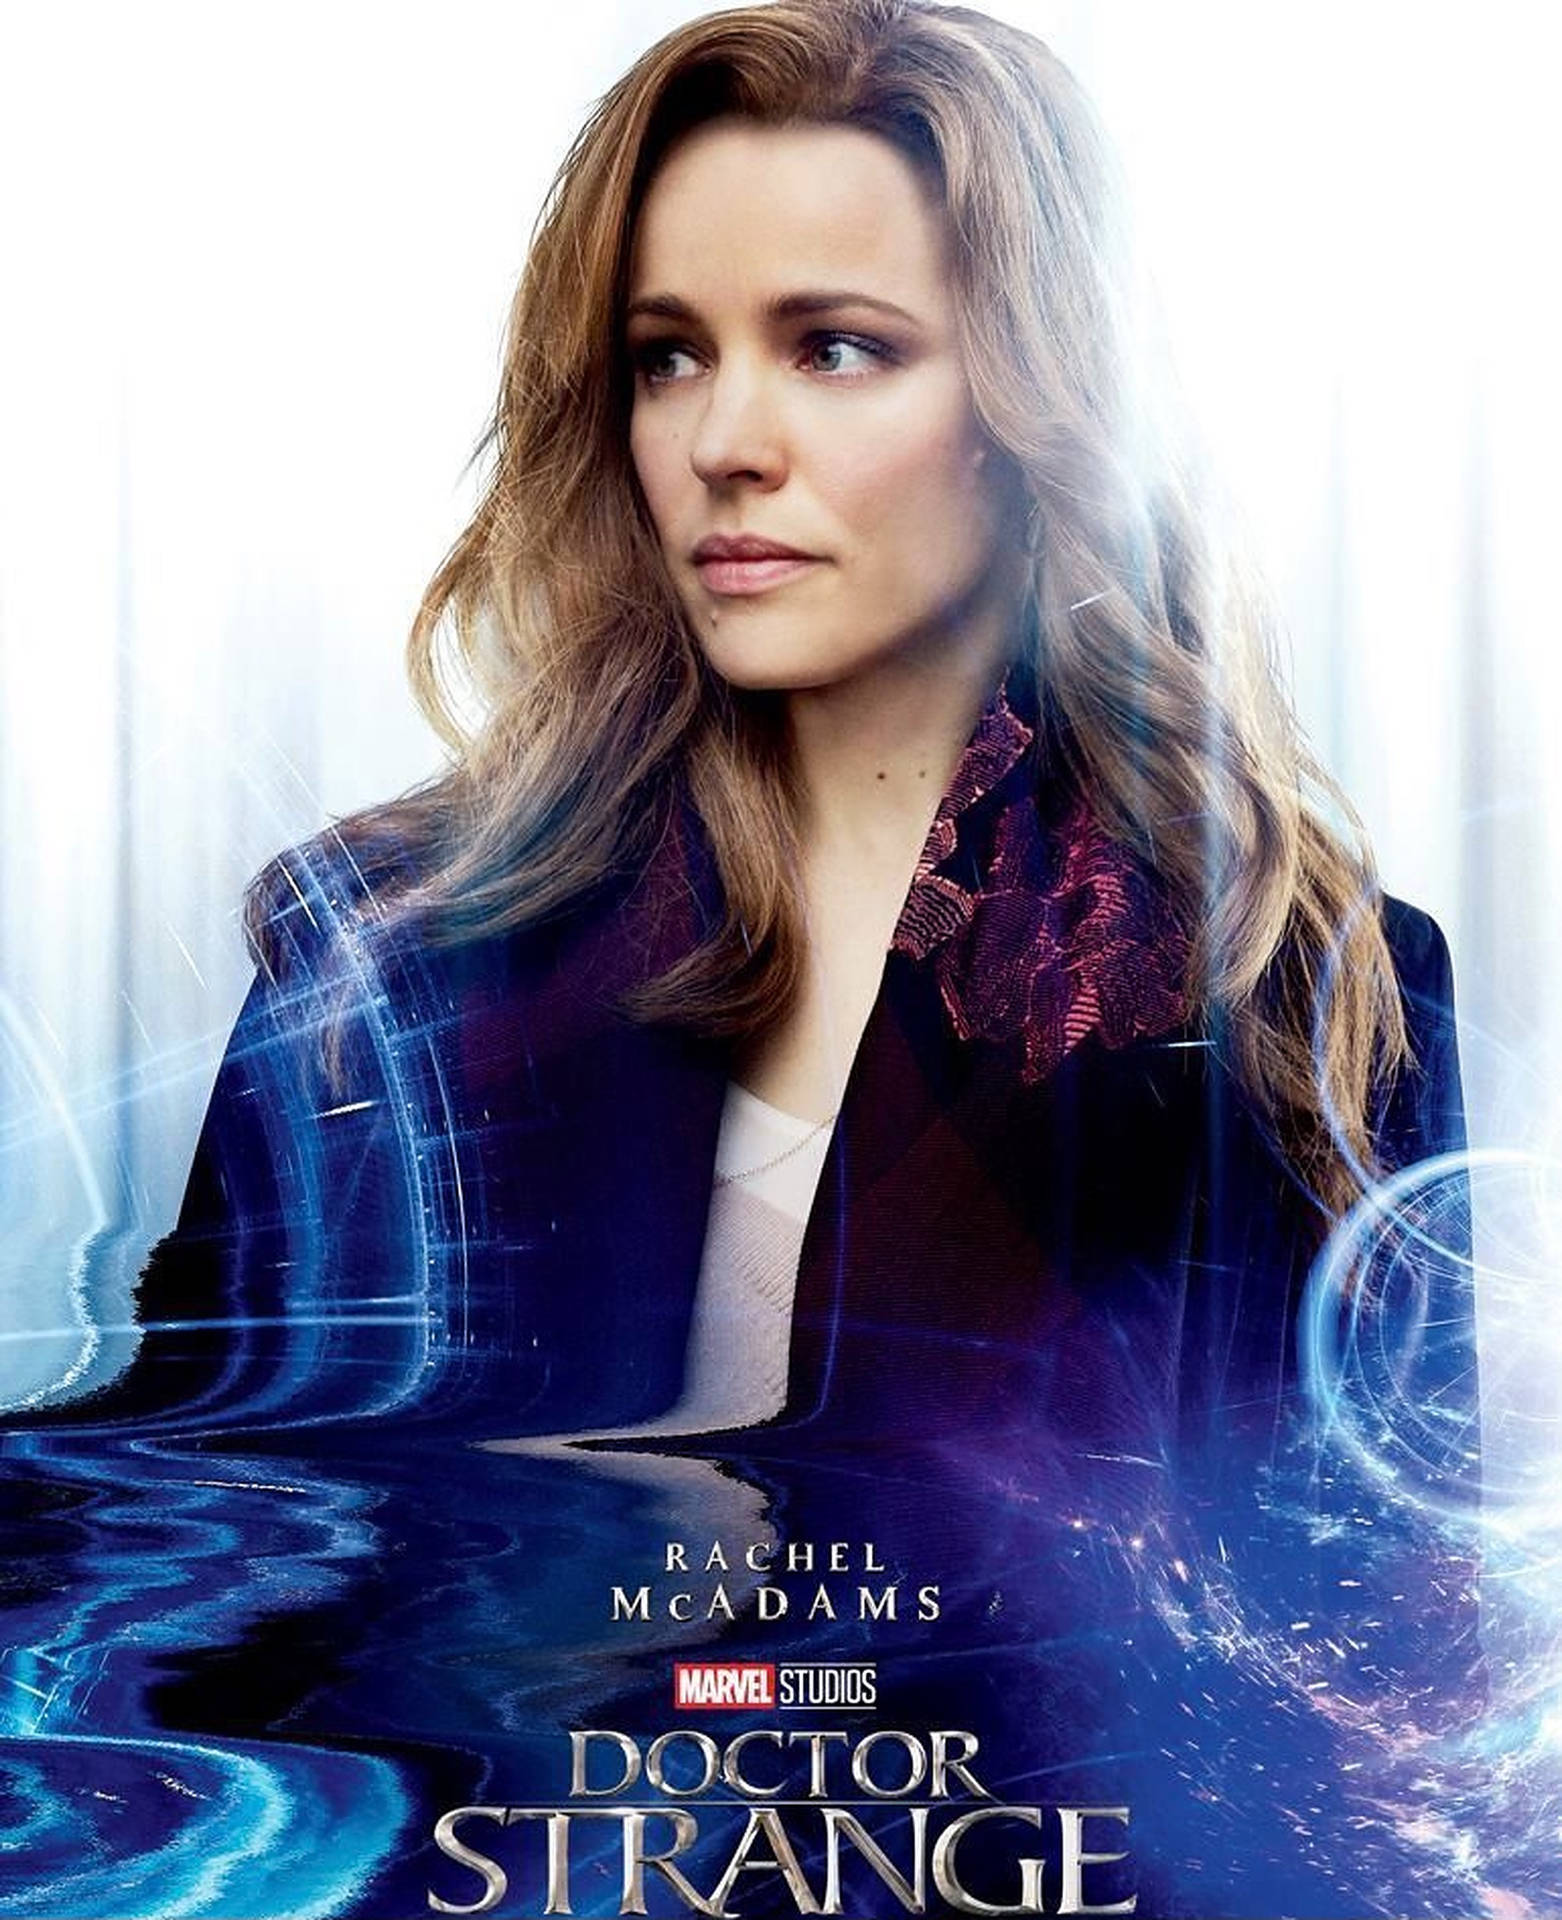 Rachel Mcadams Doctor Strange Movie Poster Background